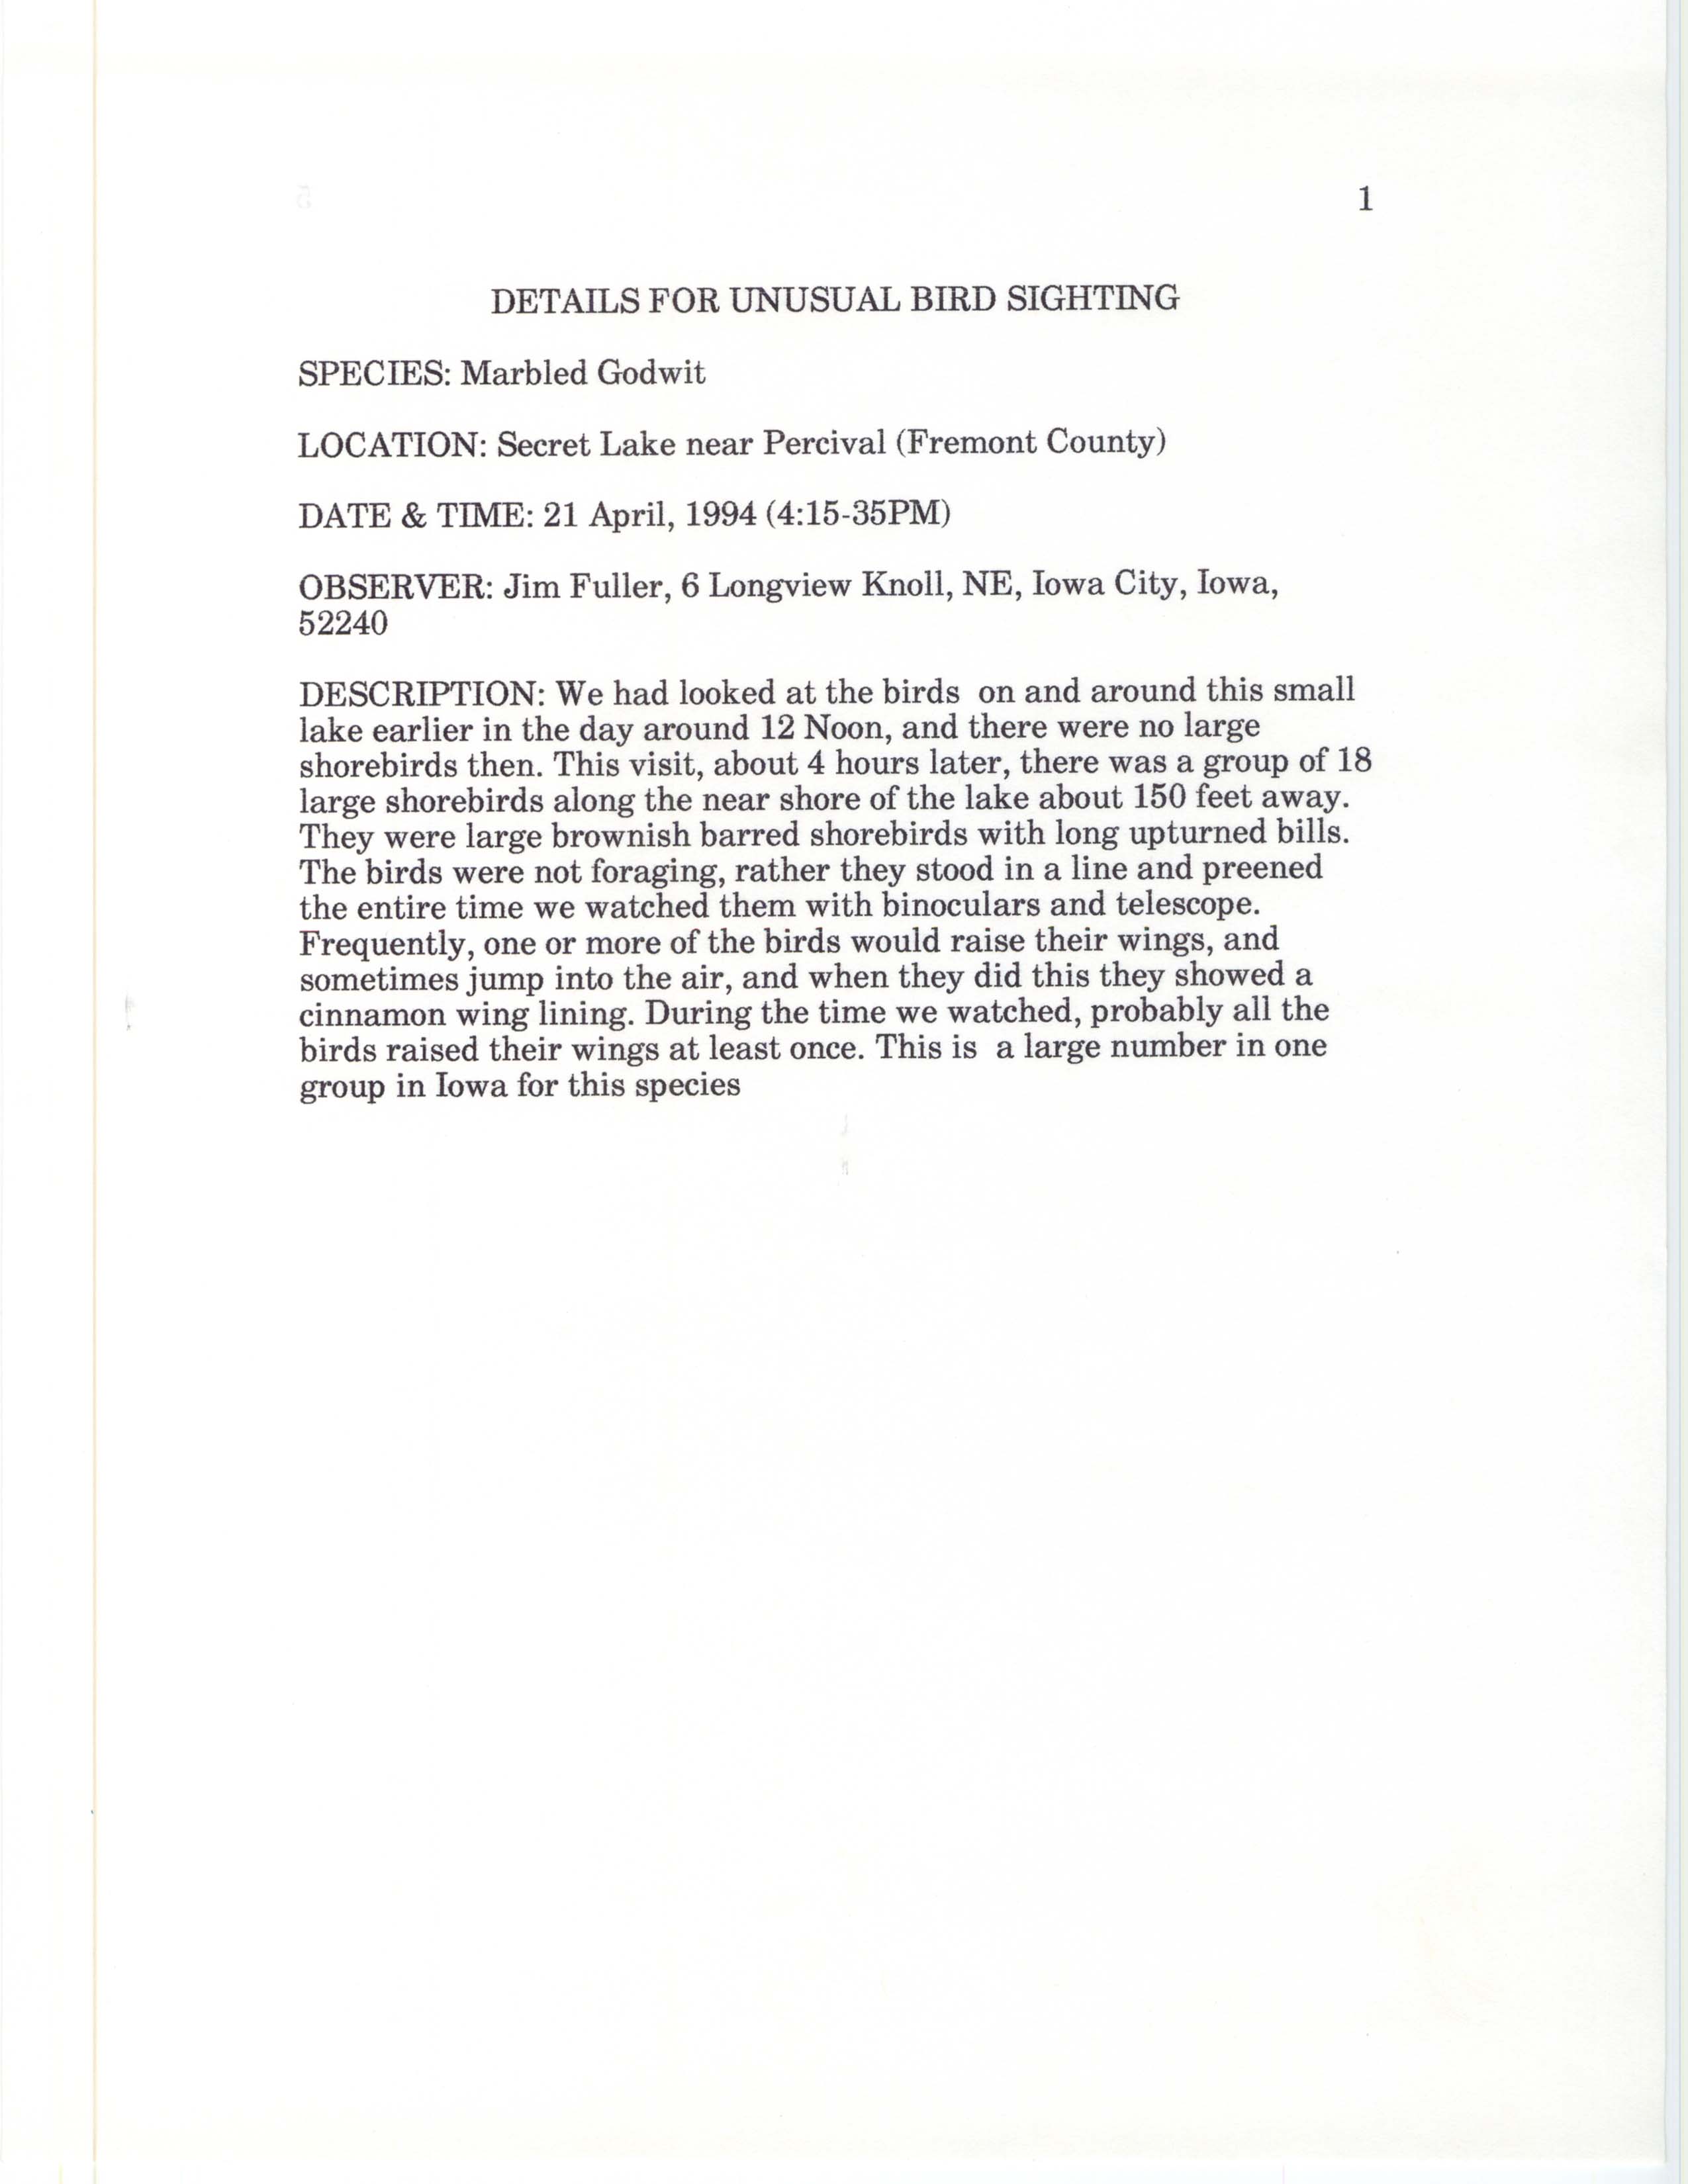 Rare bird documentation form for Marbled Godwit at Secret Lake, 1994